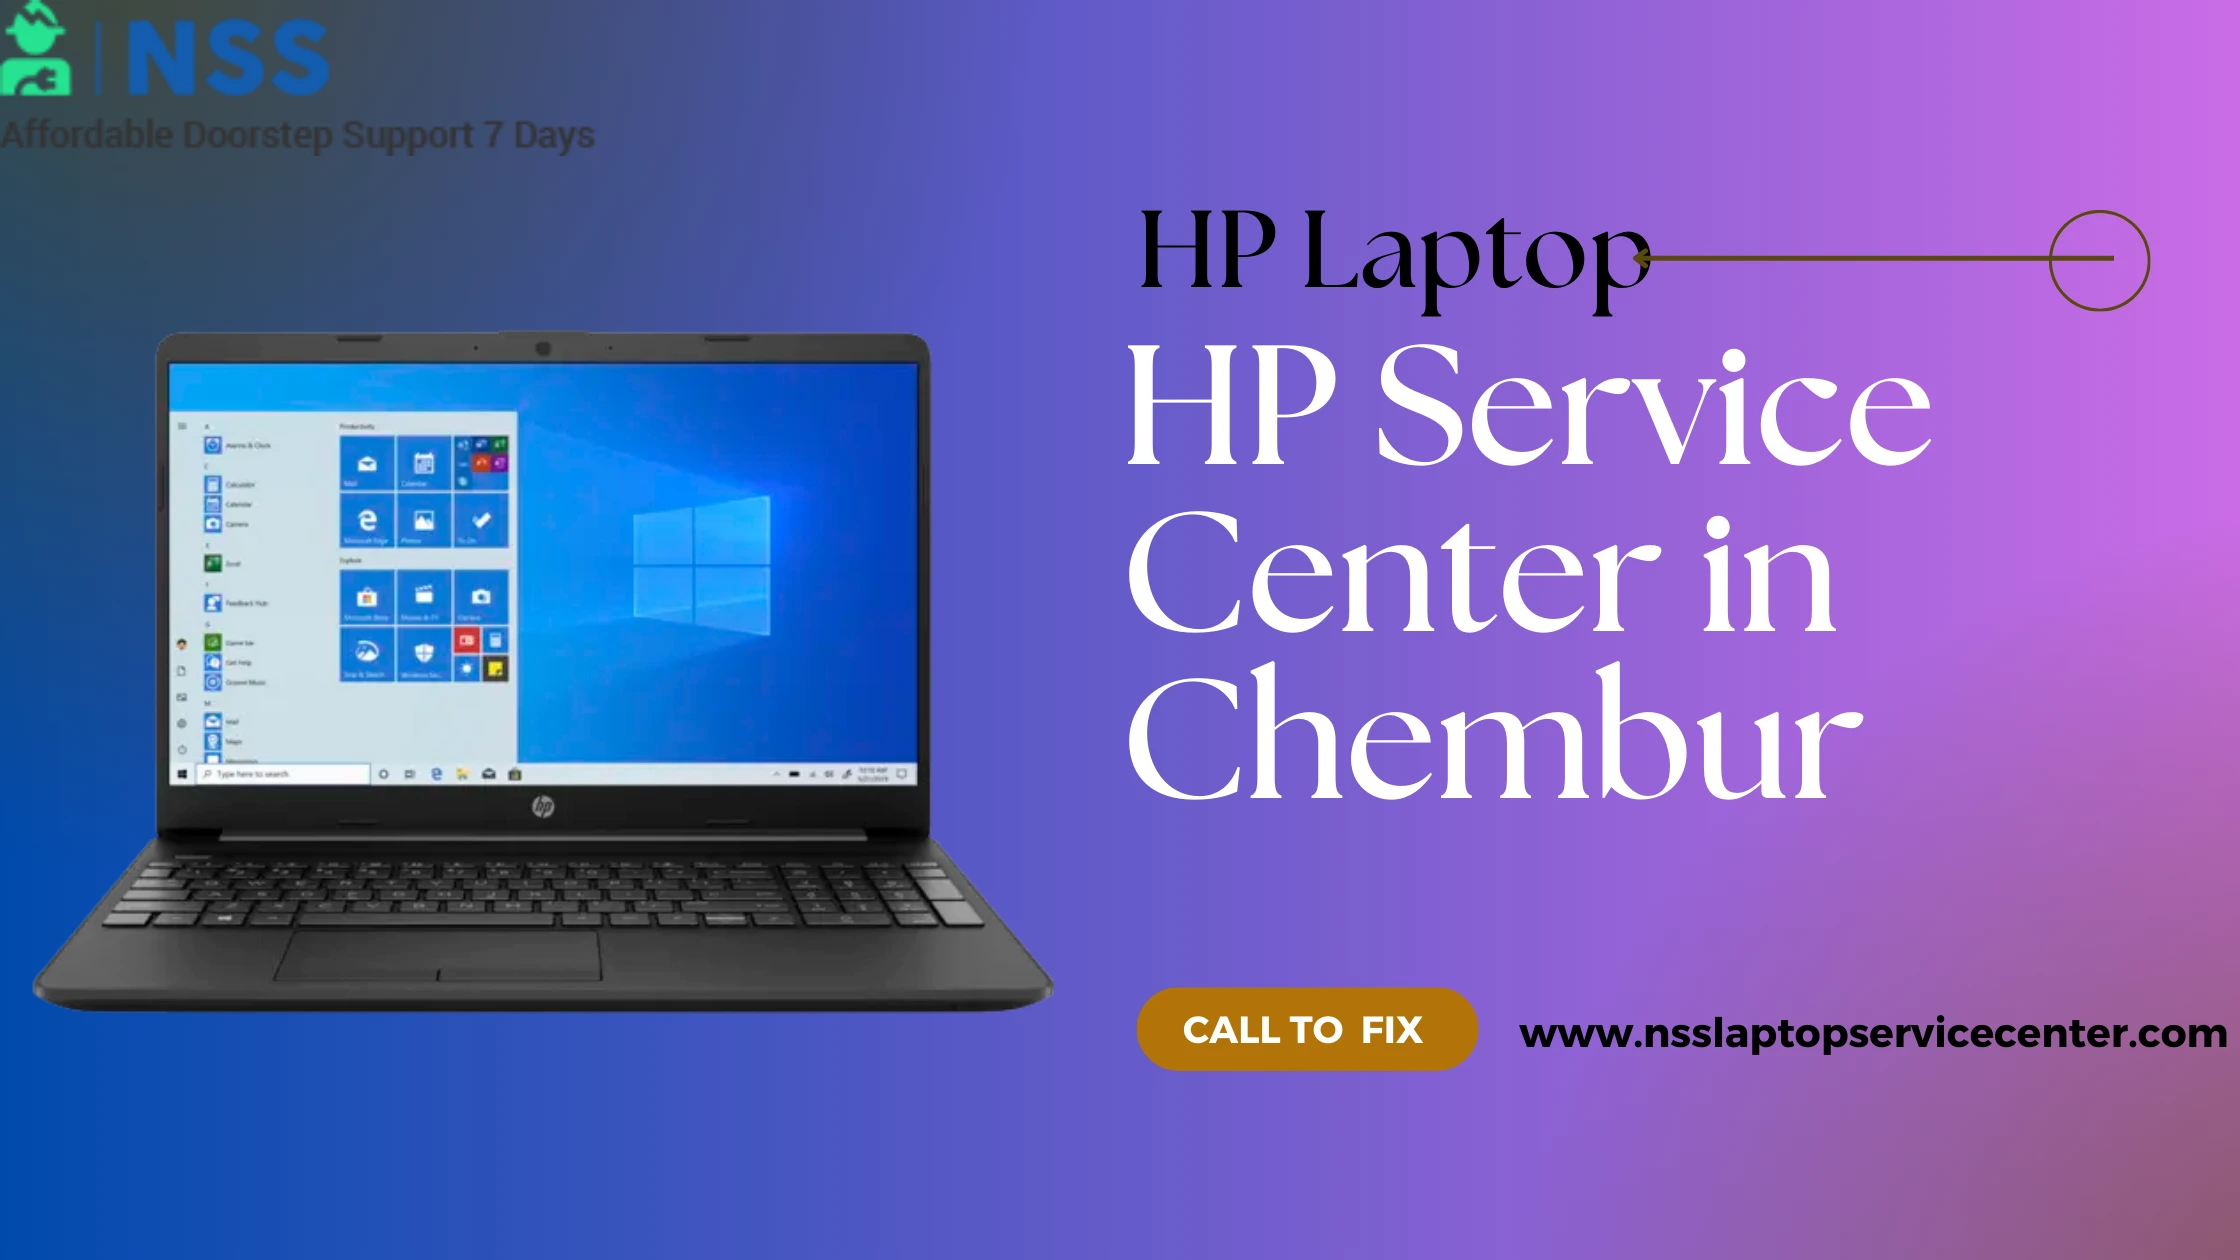 HP Service Center in Chembur Near Mumbai